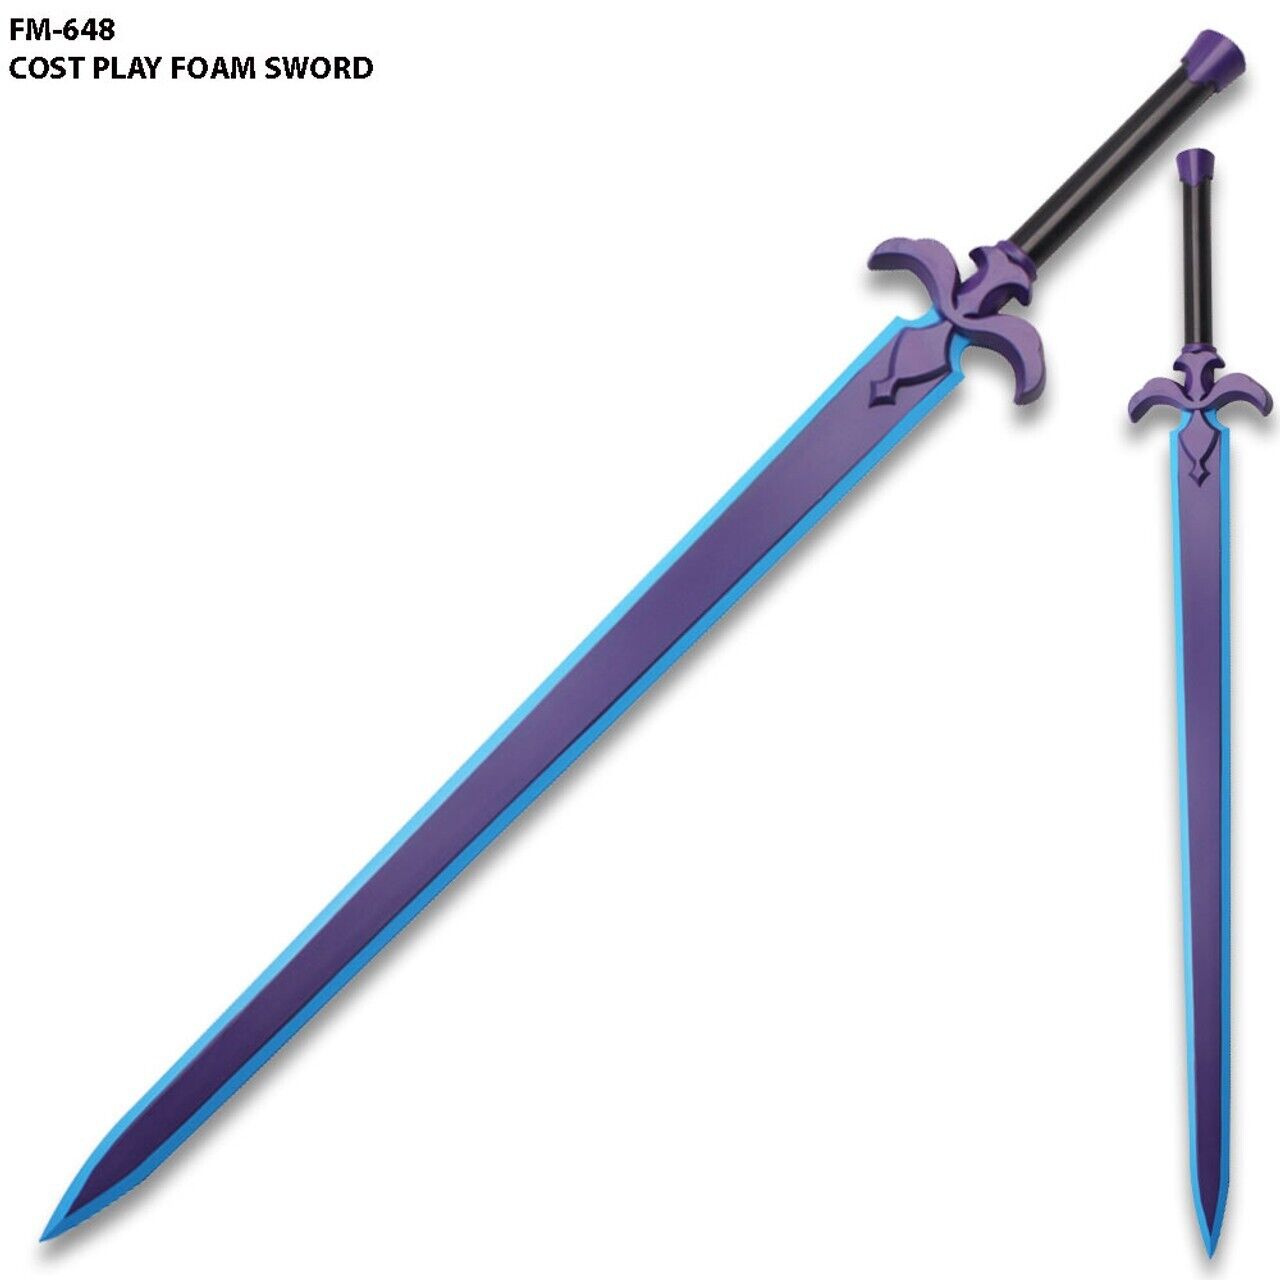 Sword Art Online Bandai Proplica PU Foam Cosplay Sword Replica